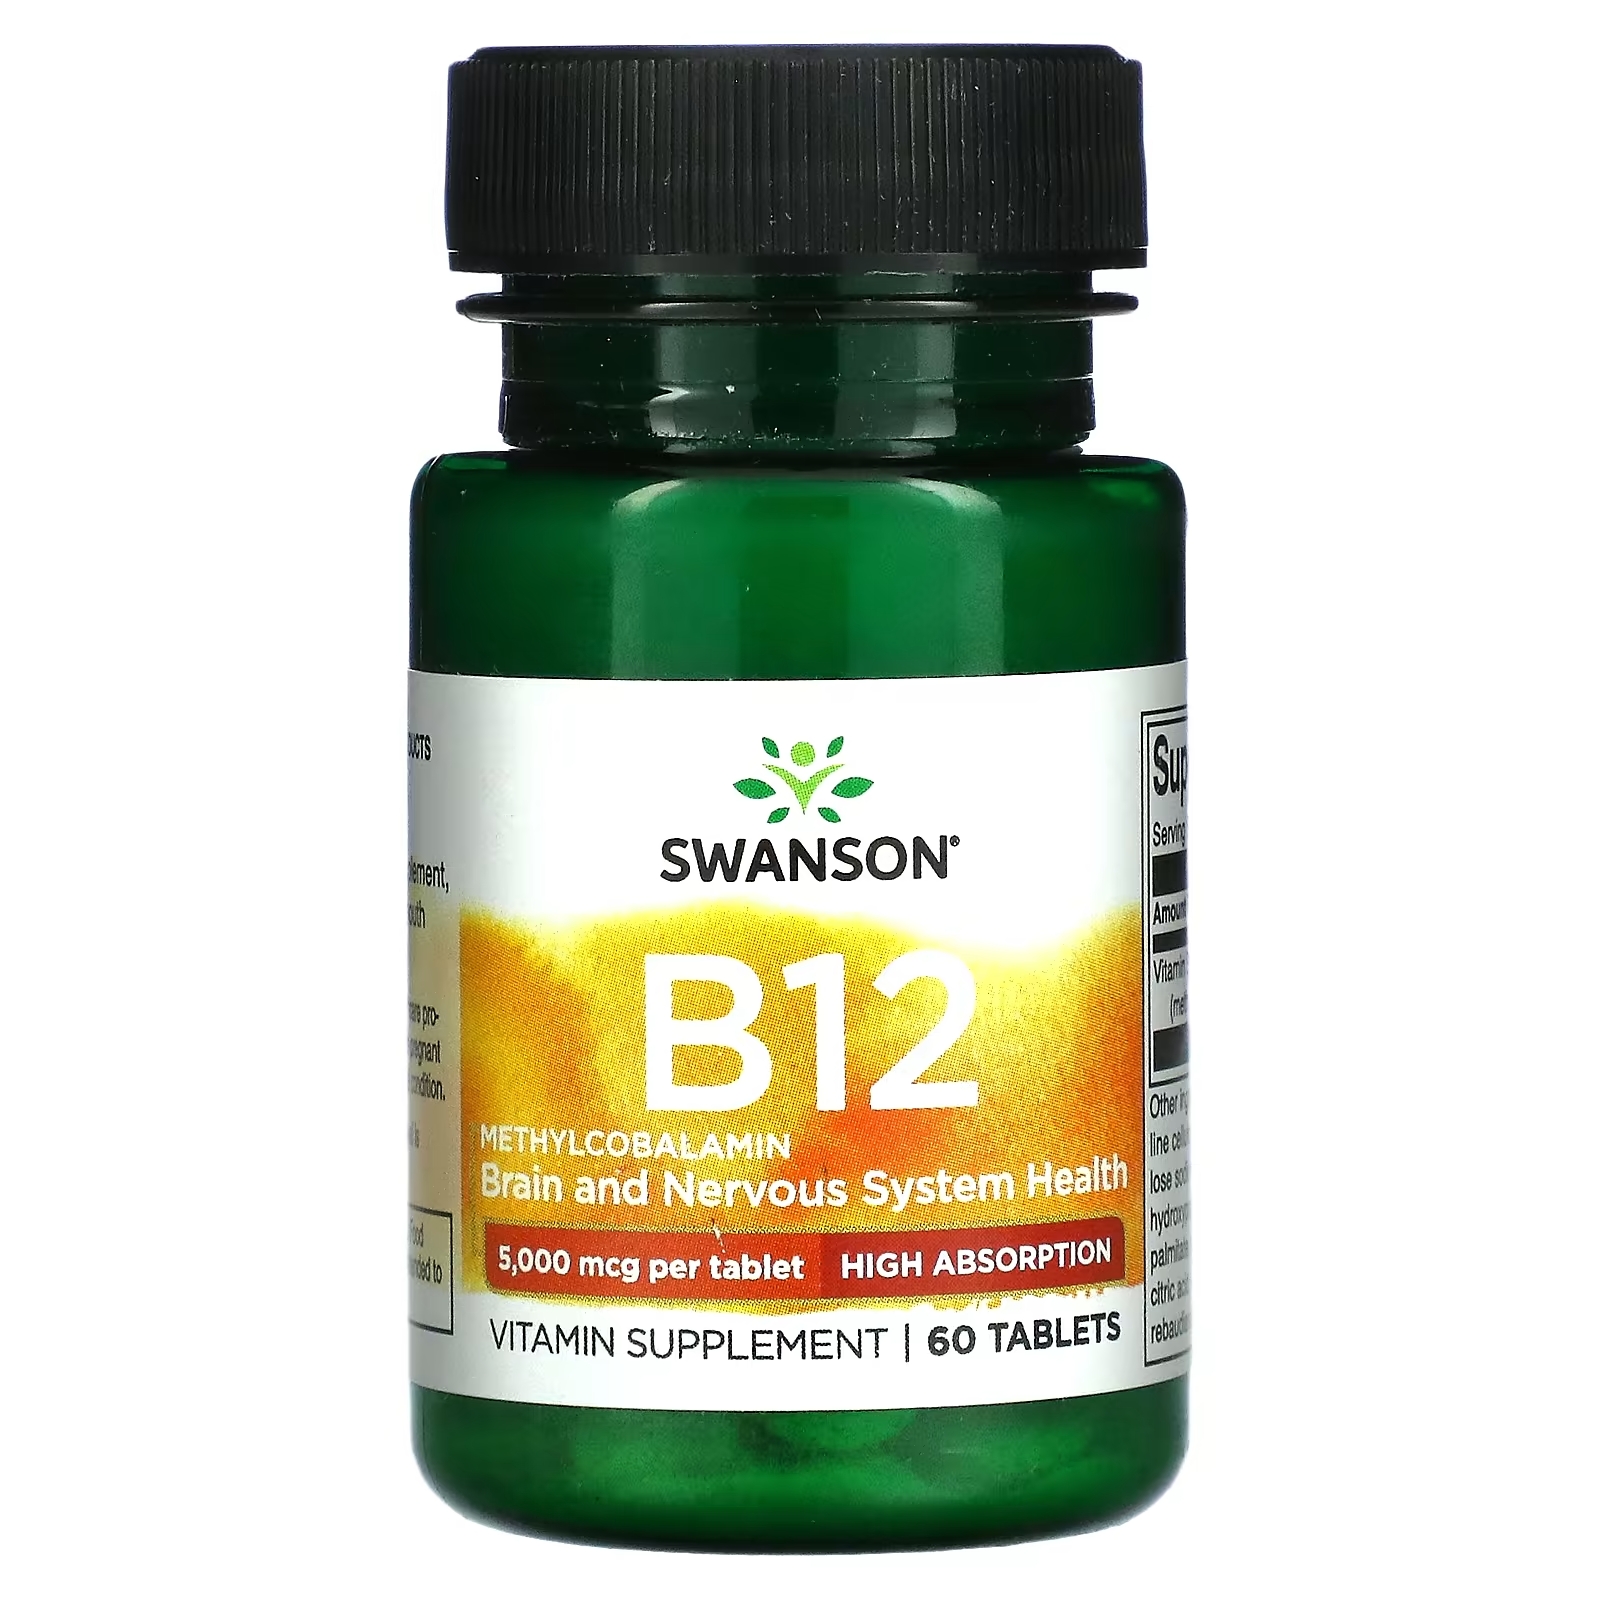 naturesplus shot o b12 5000 мкг 30 таблеток Swanson Витамин B12 5000 мкг, 60 таблеток